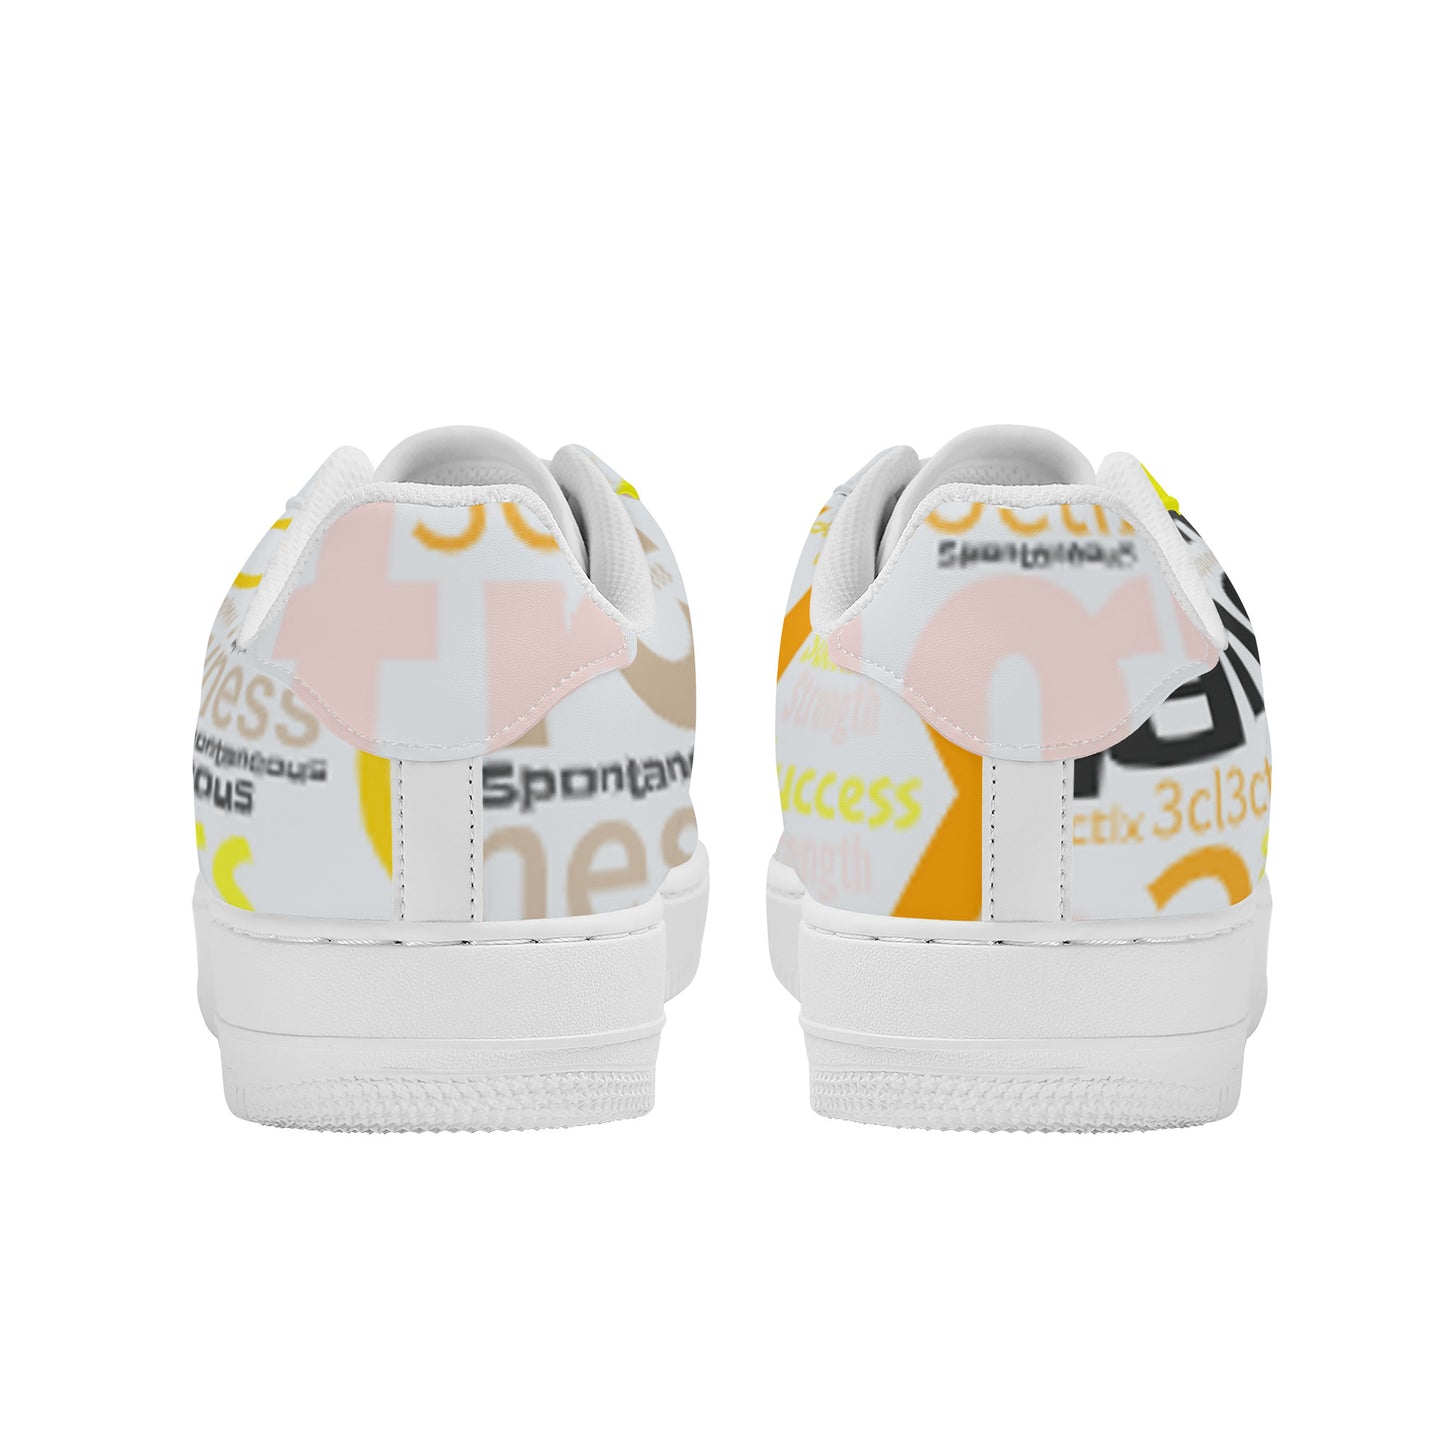 SF_F8 Low Top Unisex Sneaker Branded